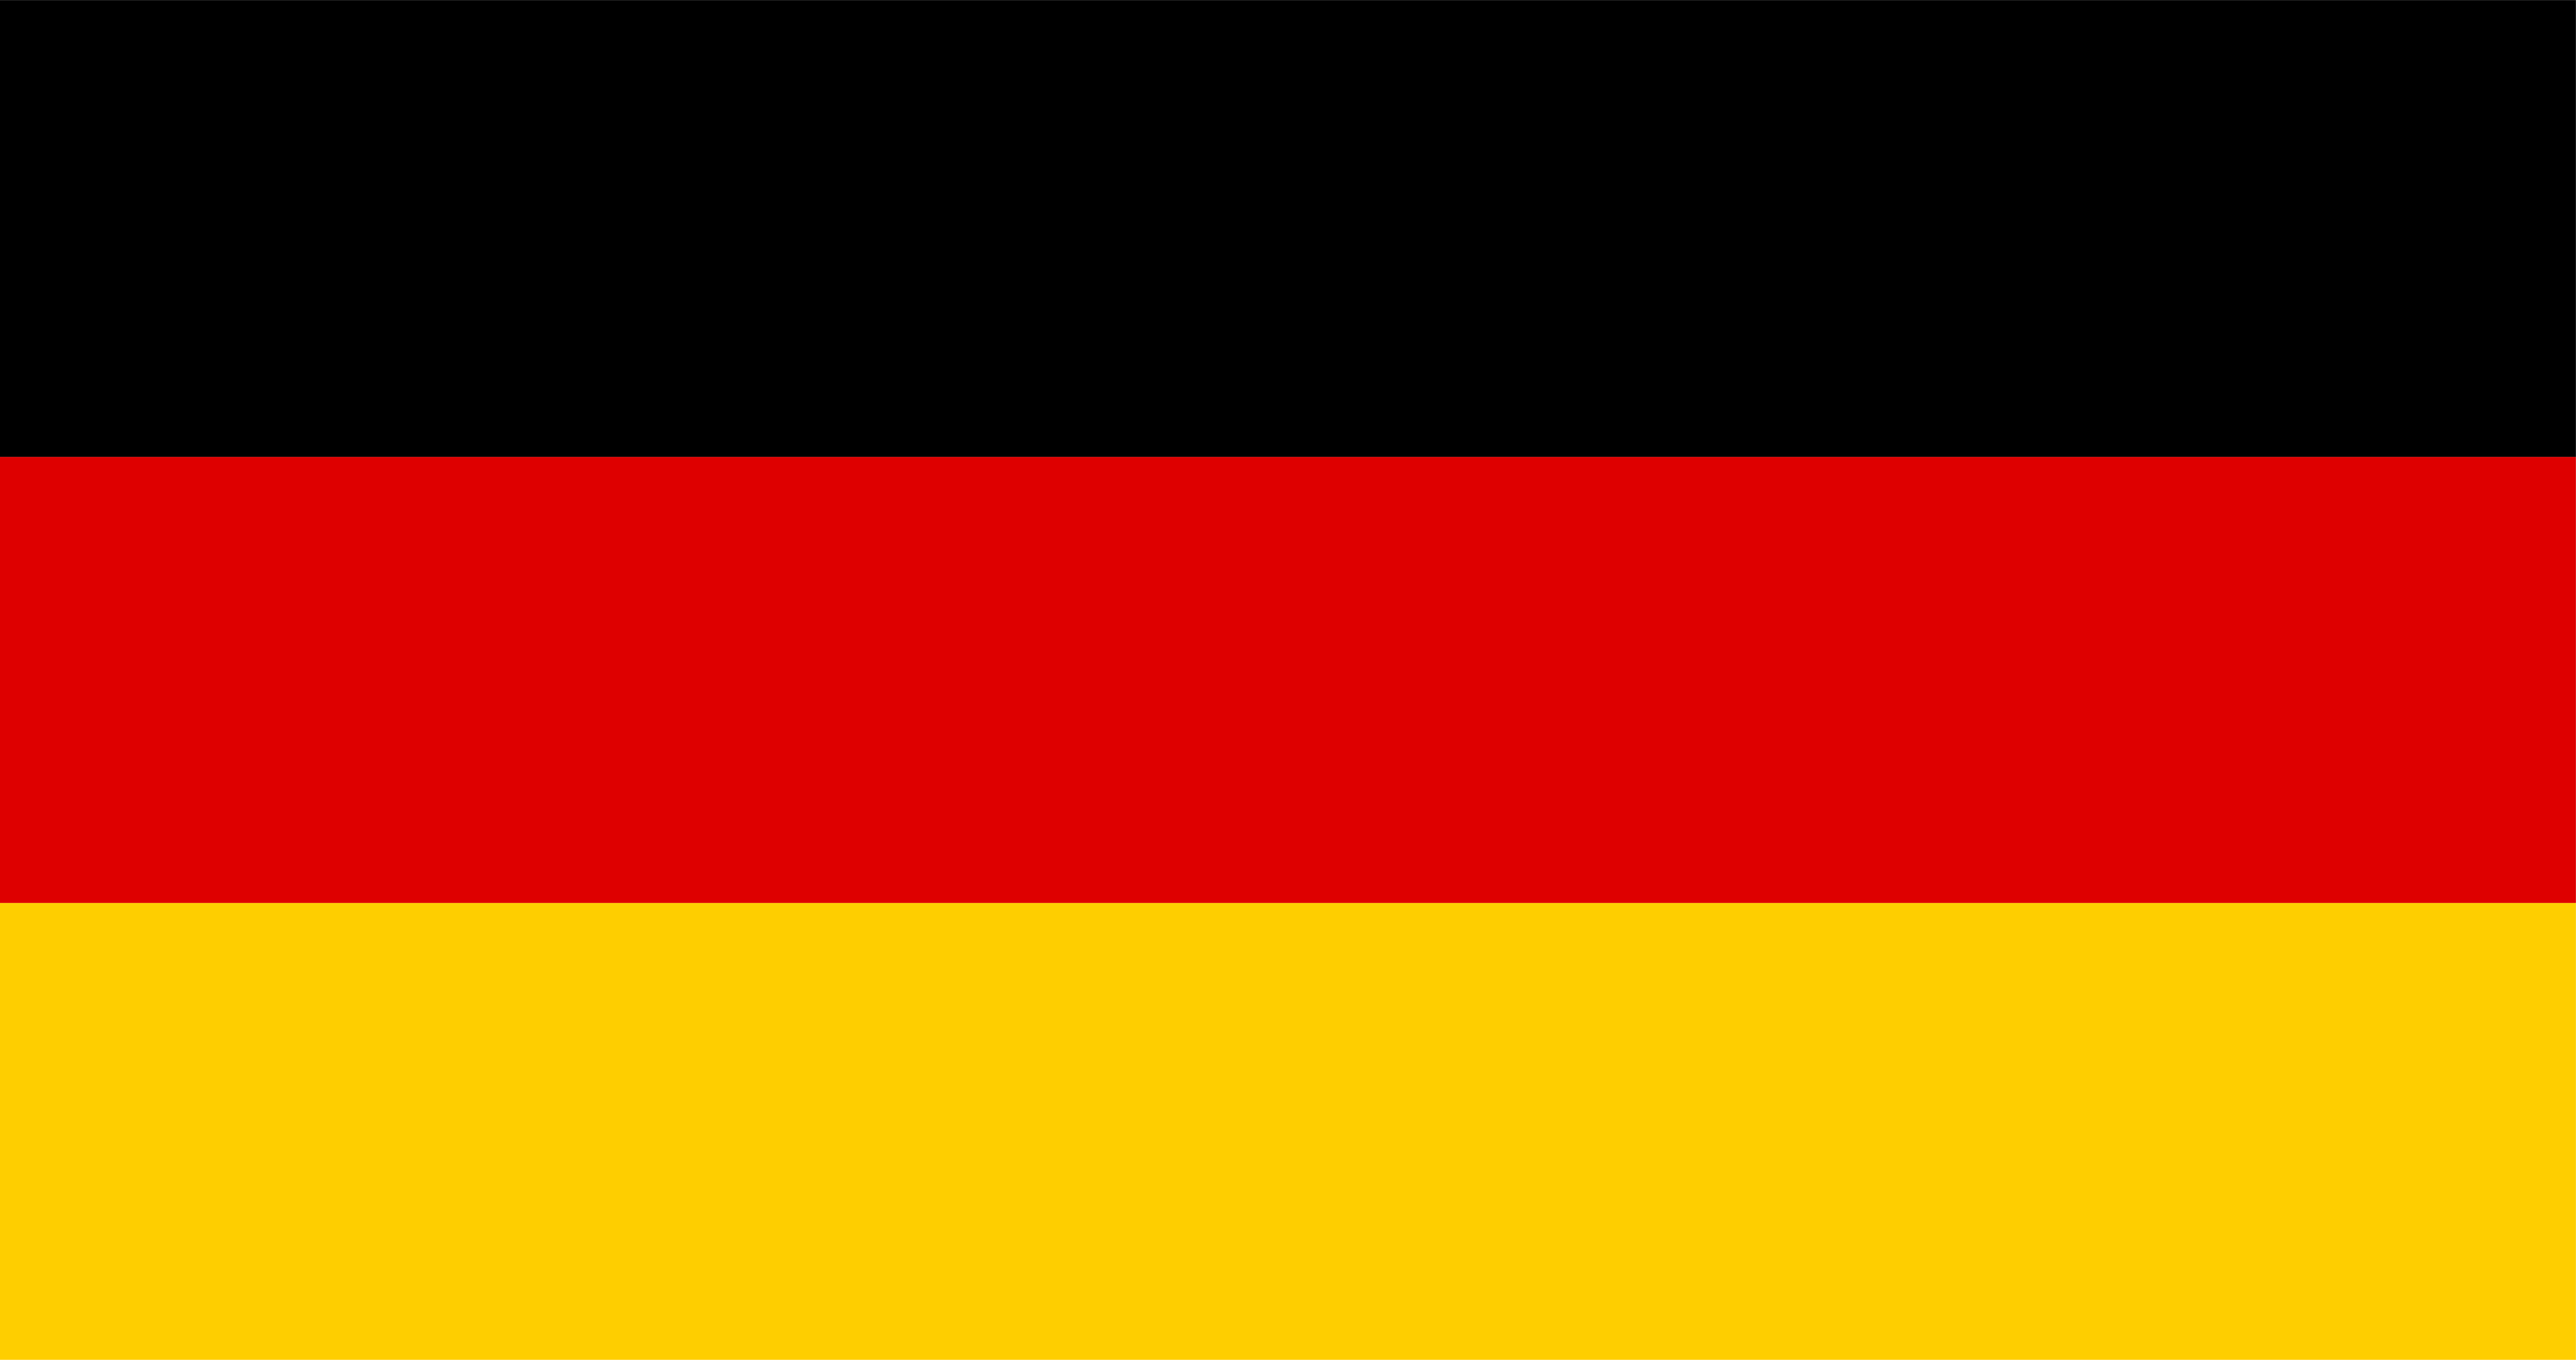 Illustration of German flag Download Free Vectors, Clipart Graphics